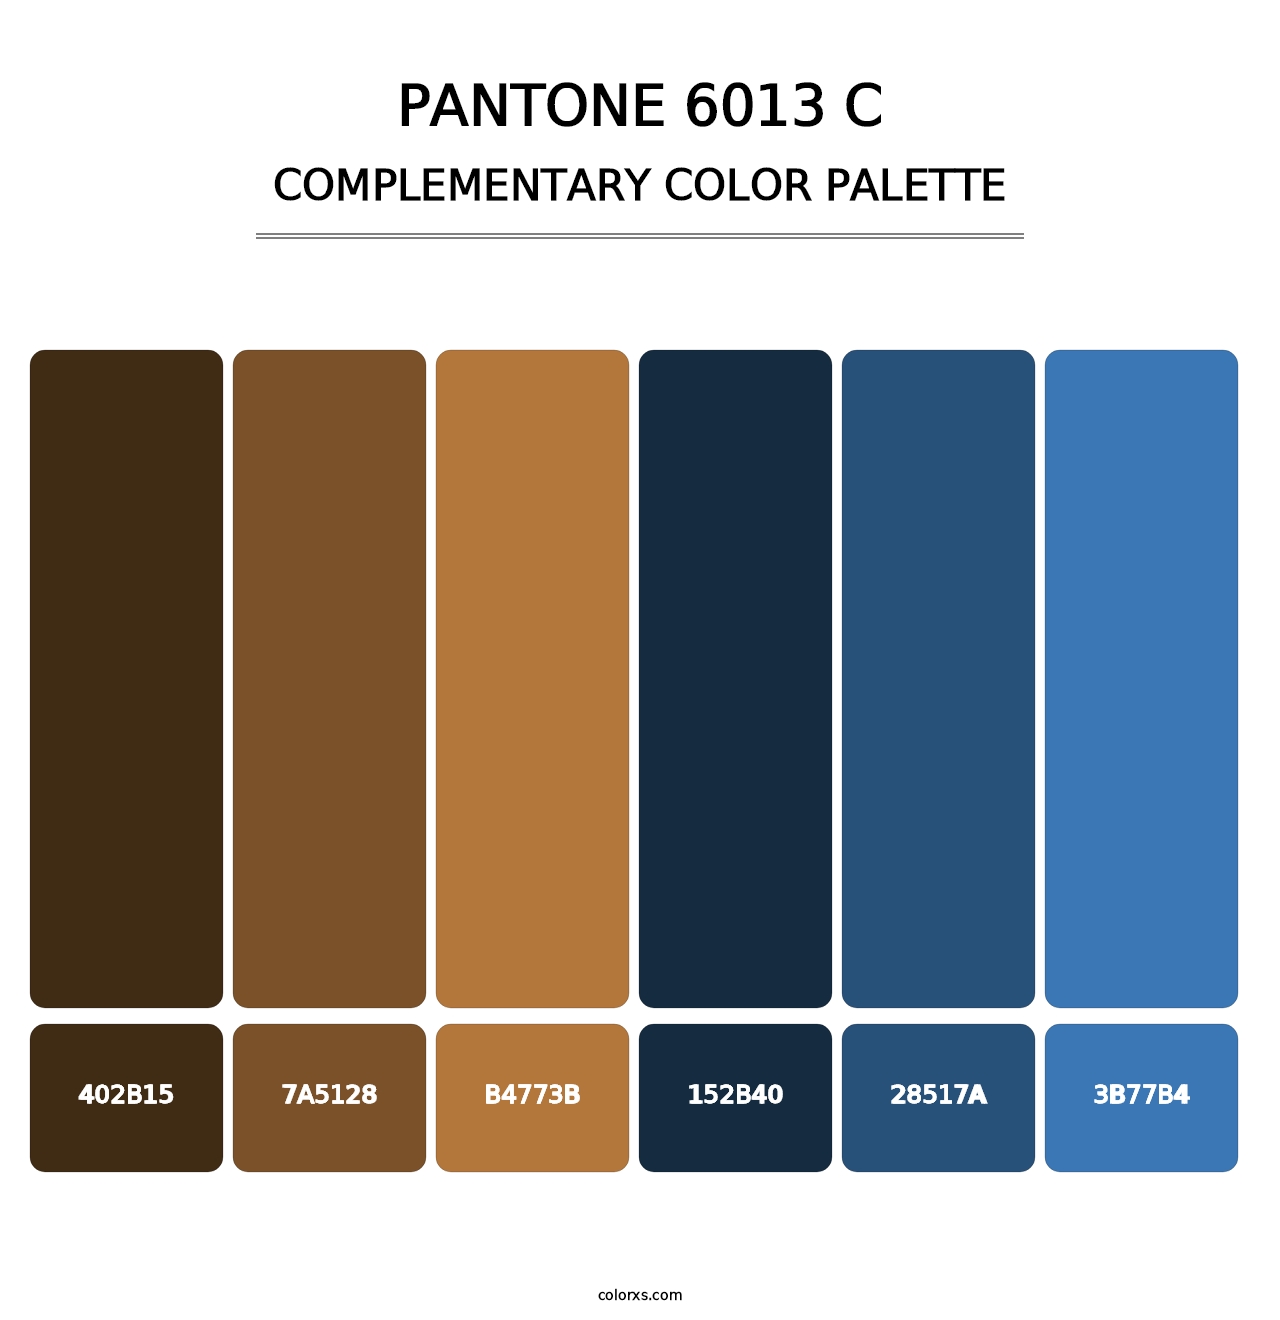 PANTONE 6013 C - Complementary Color Palette